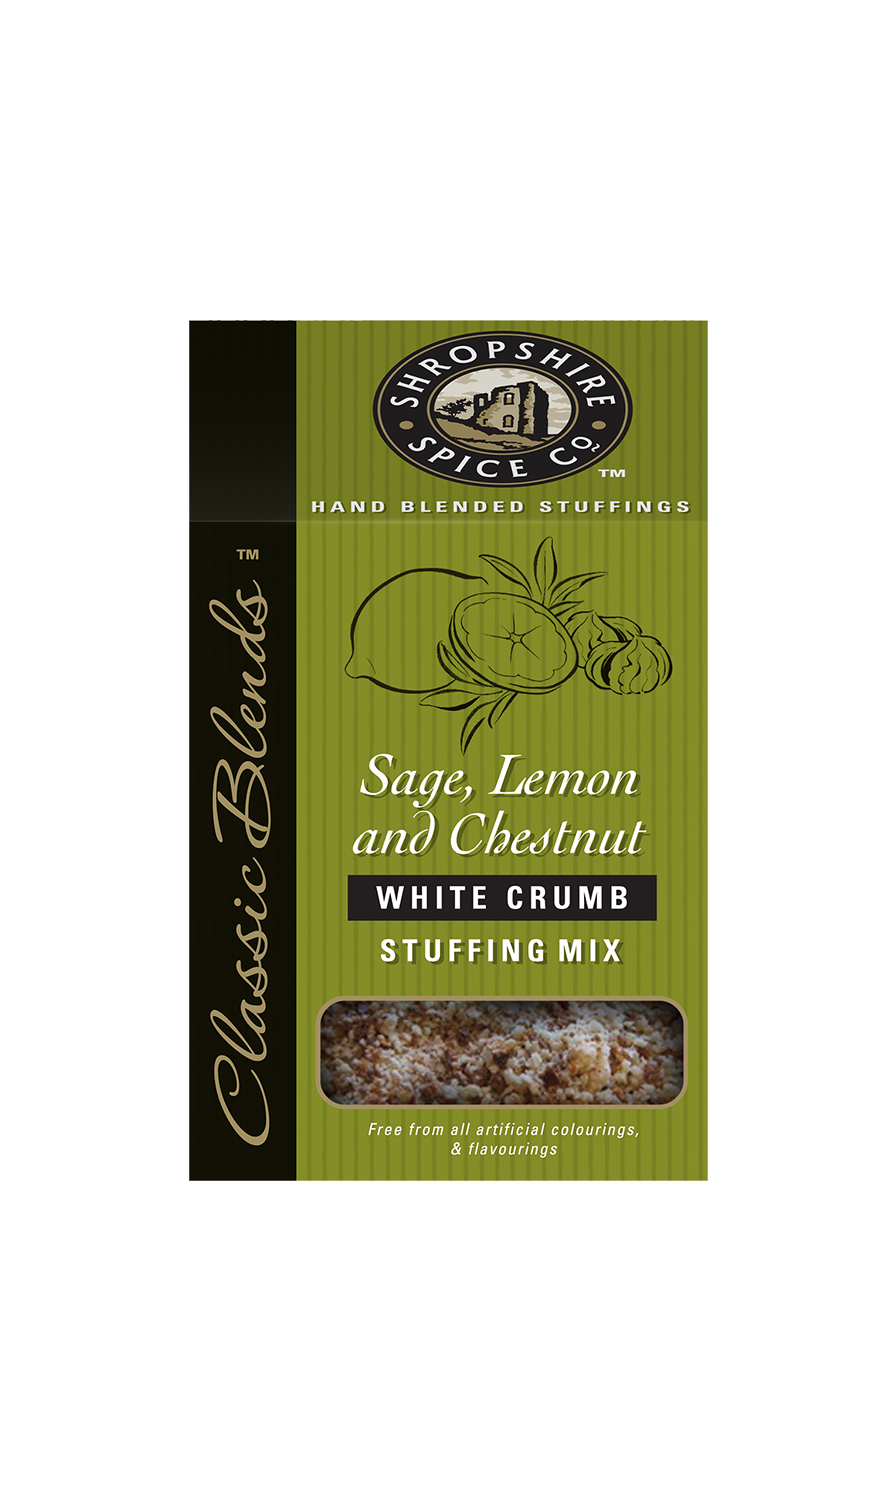 Shropshire Spice Co White Crumb Stuffing Mix Sage, Lemon and Chestnut 150g